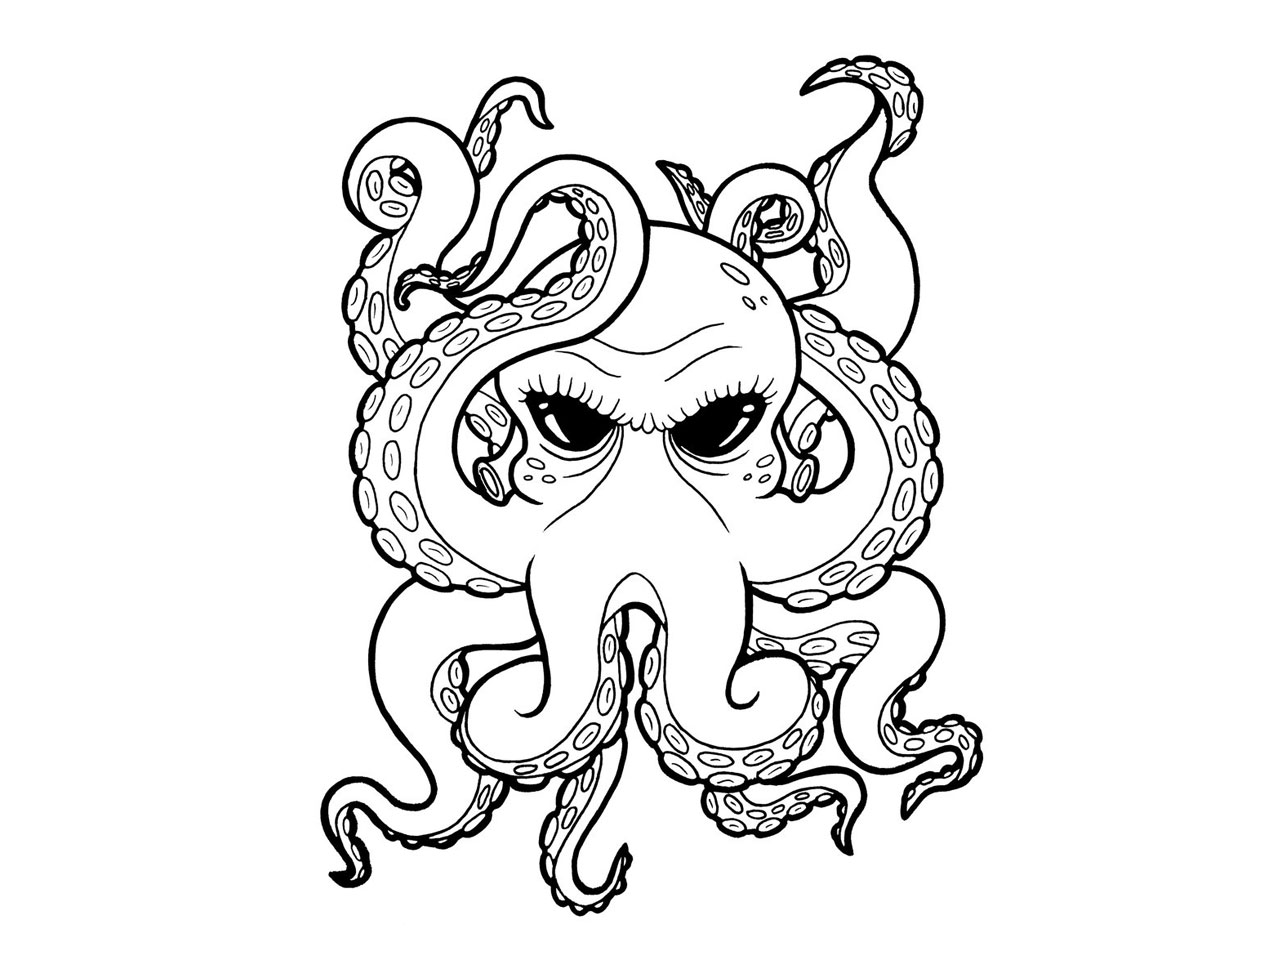 COVASA Mens Summer ShortsMonochrome Octopus Tattoo Art Style Naval Sketch Myth 